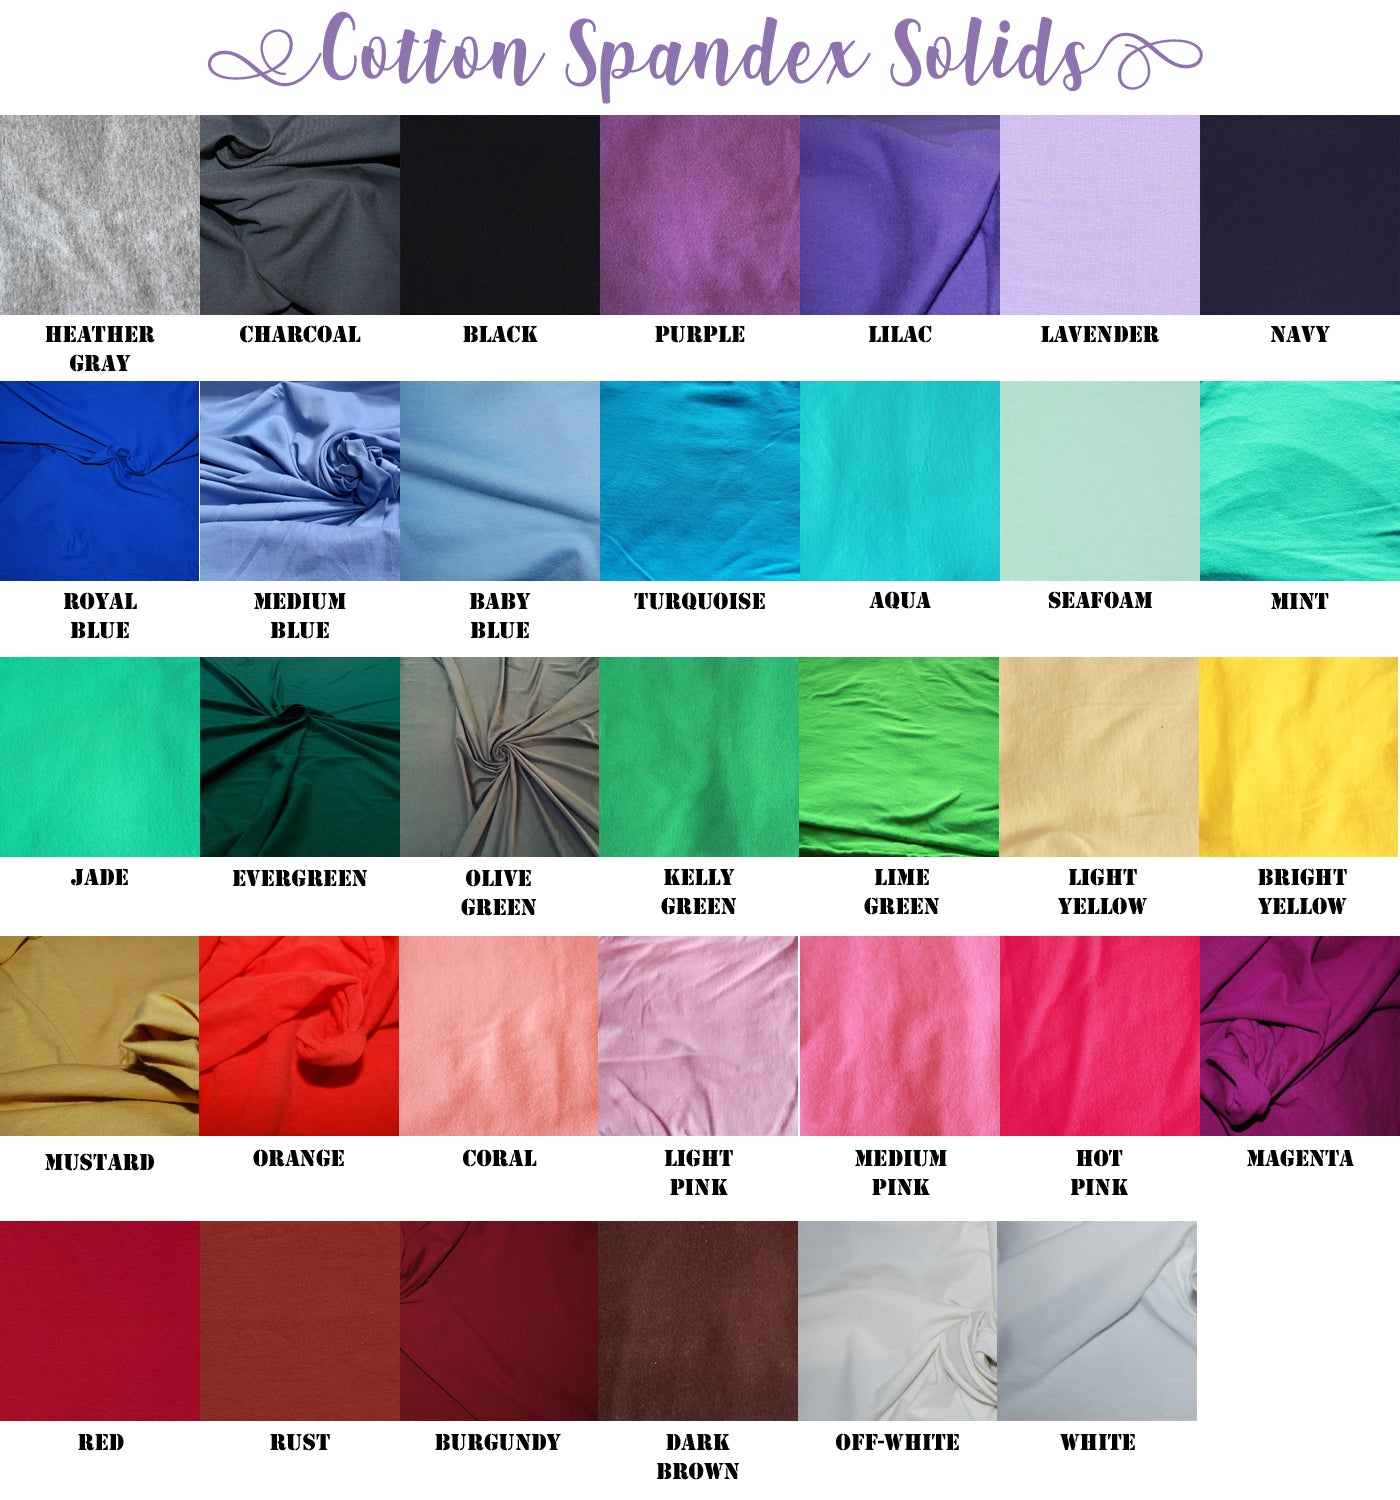 Sweet Dreams Sleep Sack - Knit Solids